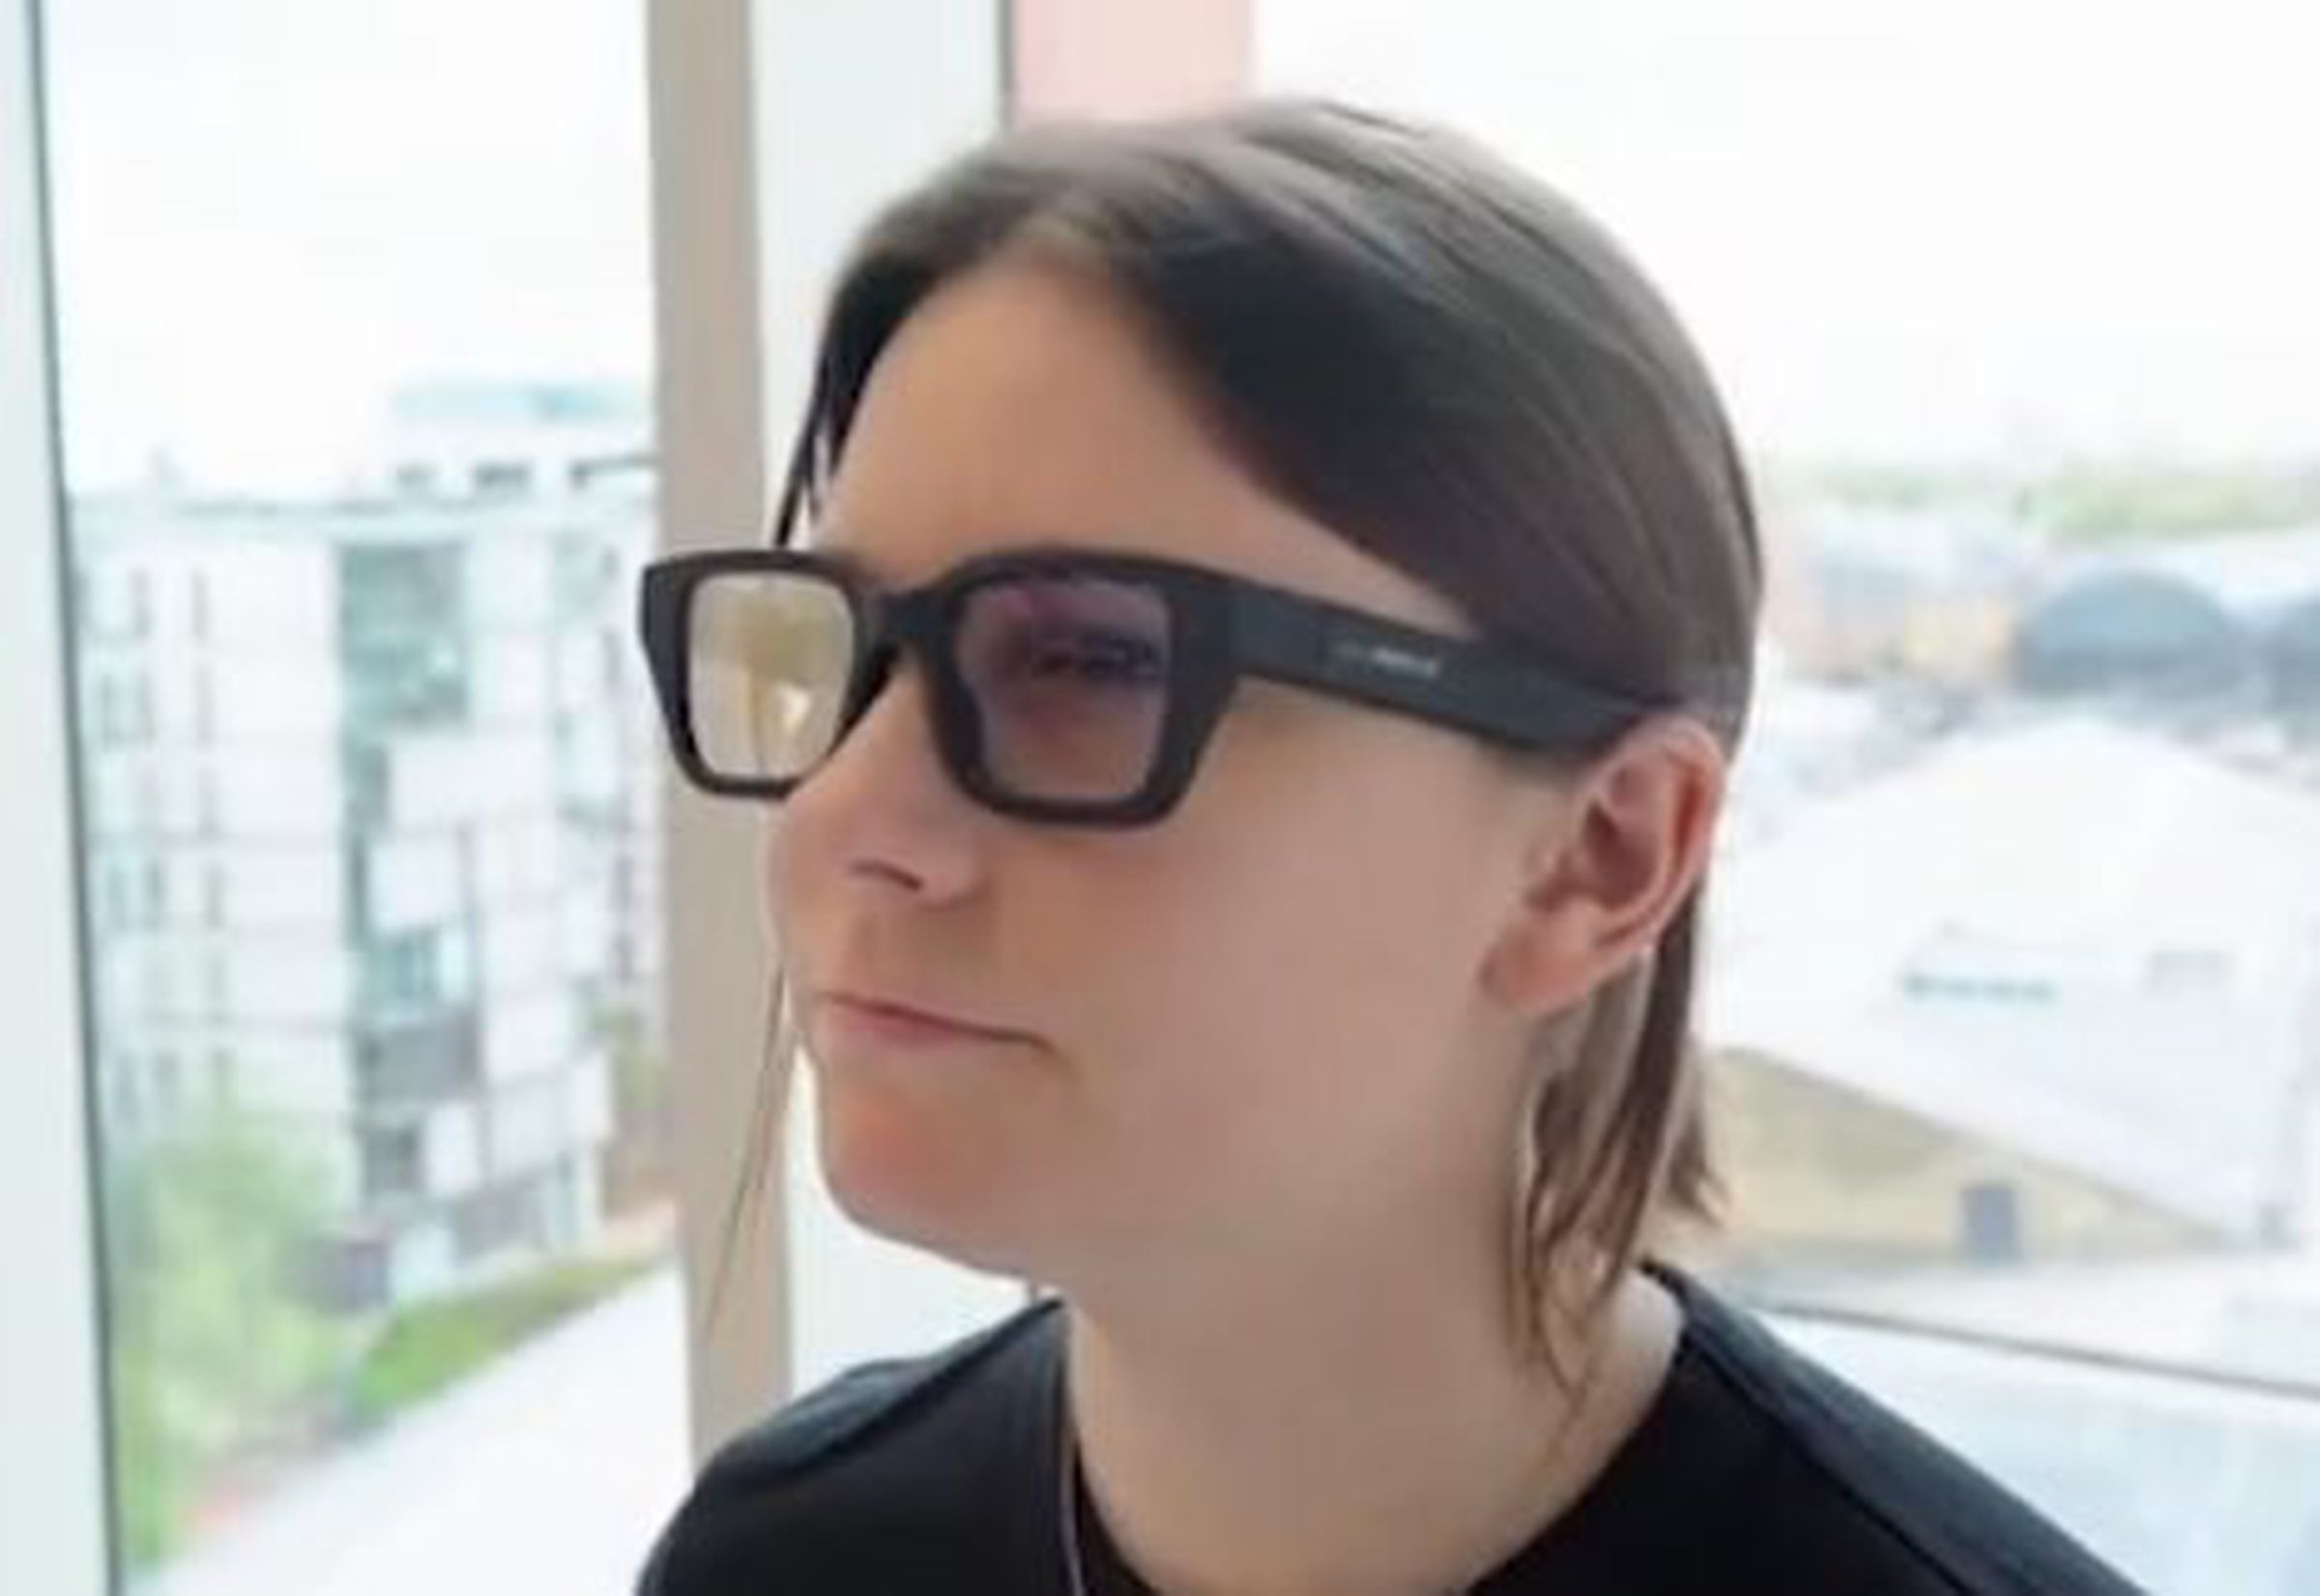 Google’s new AI / AR glasses prototype.